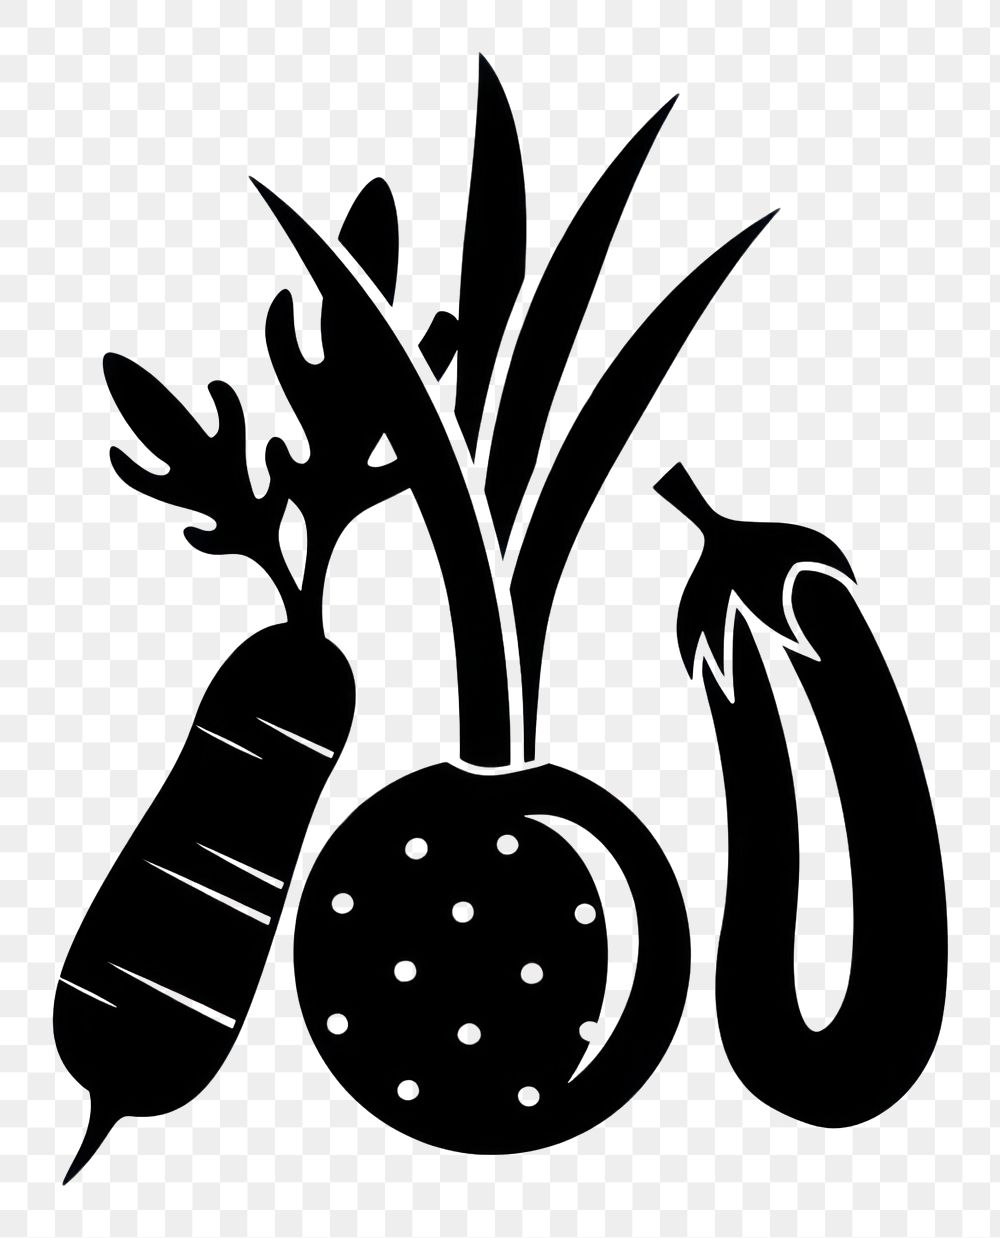 PNG Vegetables logo icon black white background monochrome.